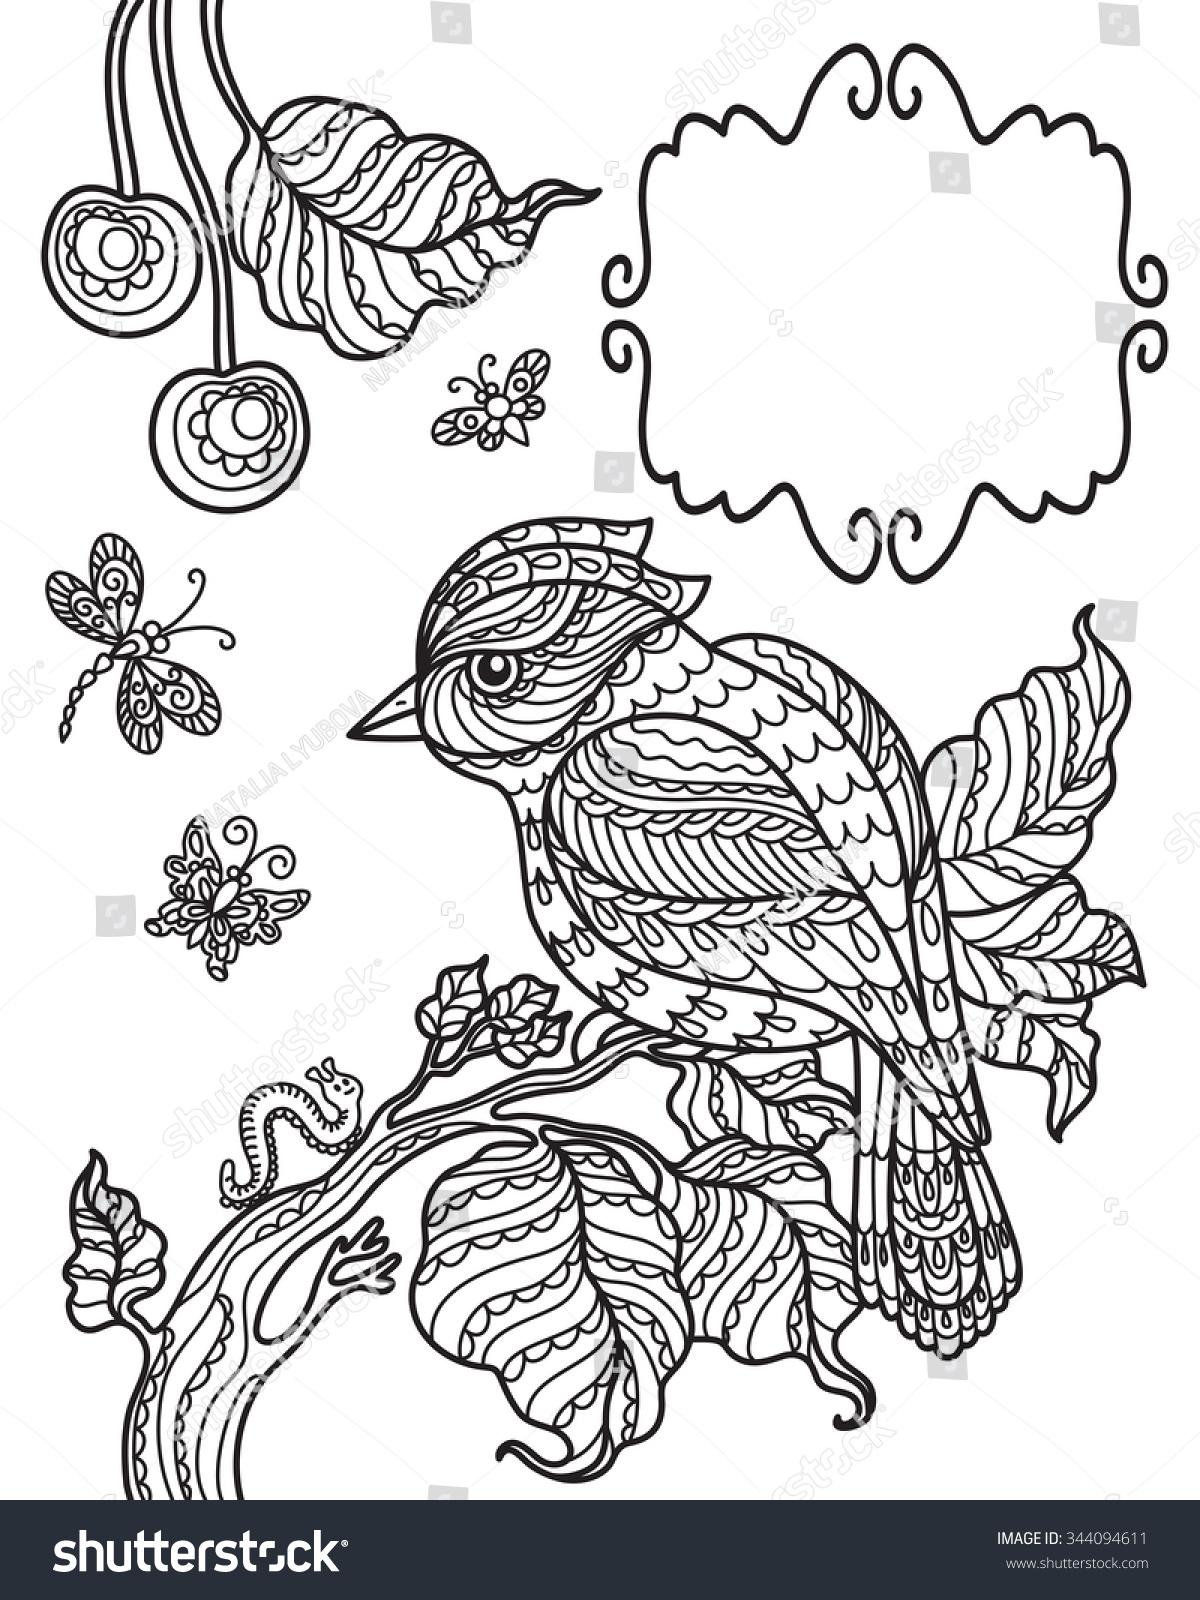 Black White Illustration Of A Bird On A Branch Design Element